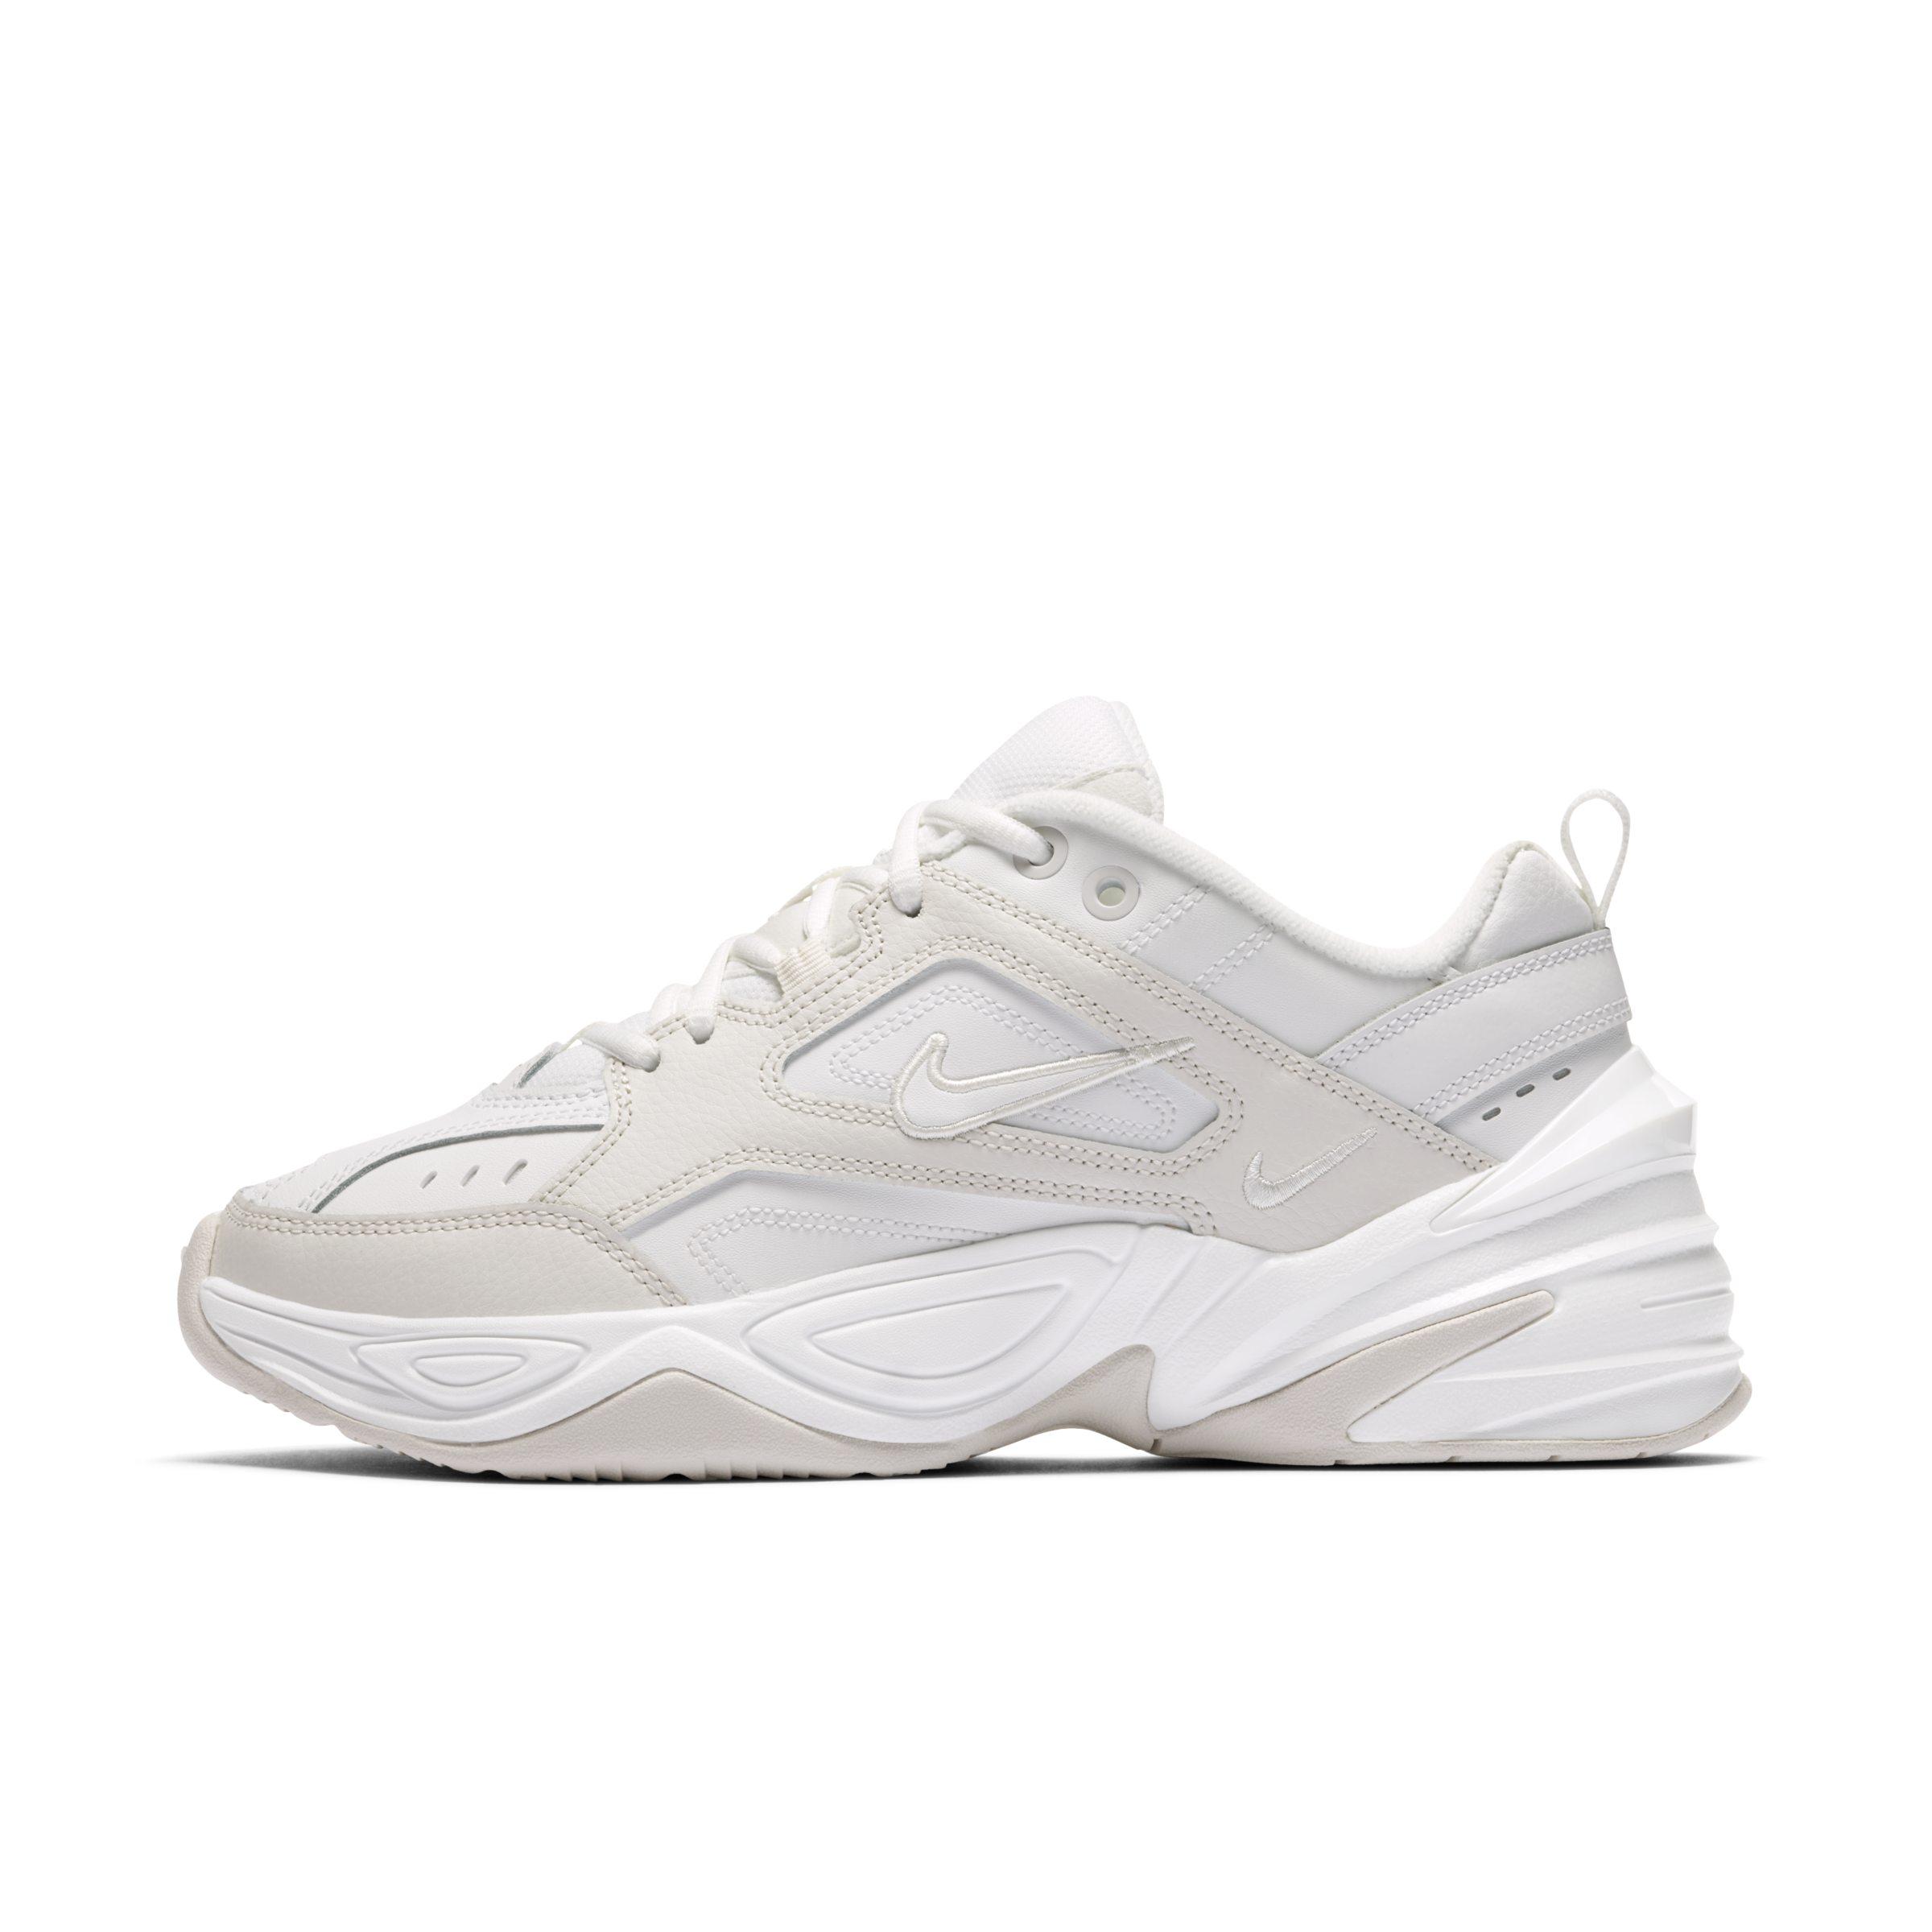 Nike M2k Tekno Shoe in Cream (White) - Lyst